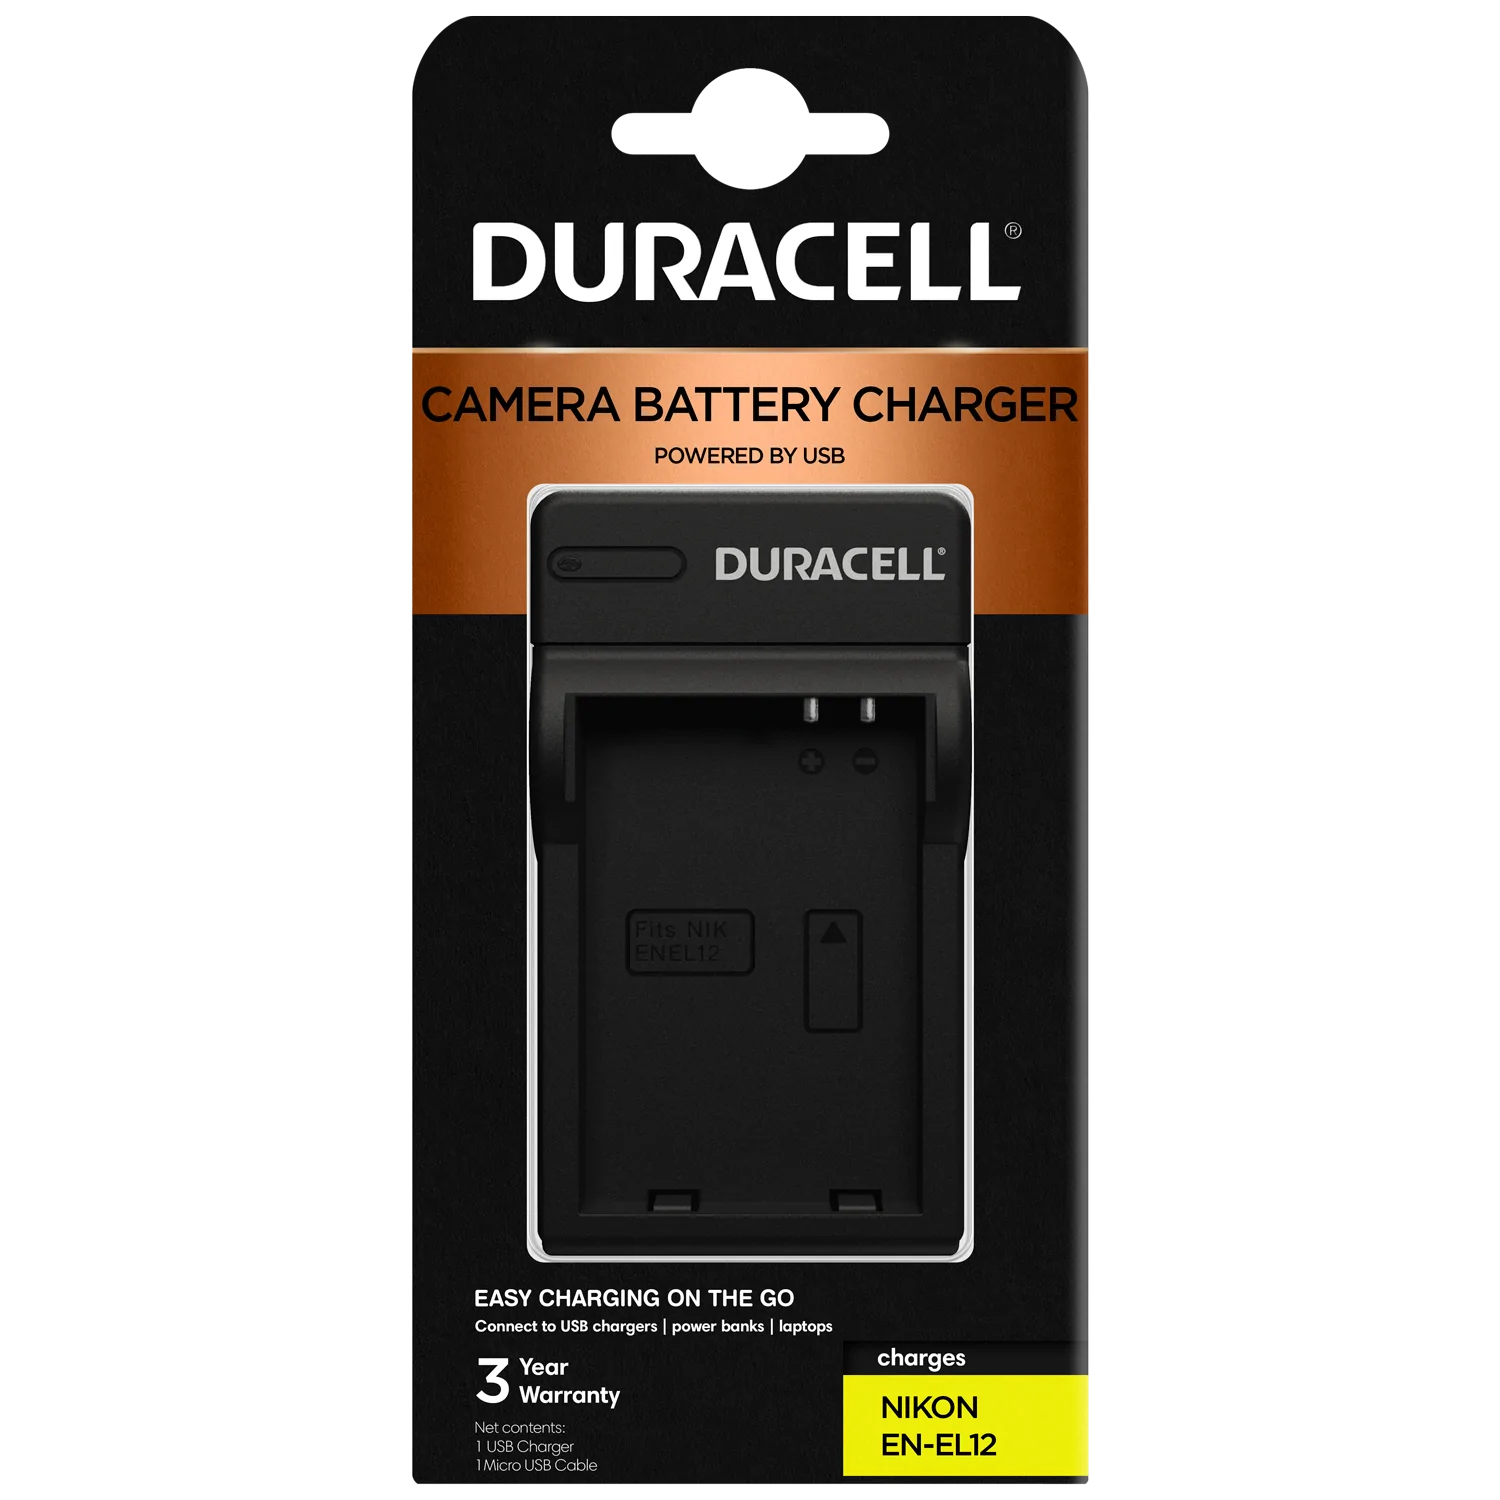 DURACELL USB BATTERY CHARGER - FOR NIKON EN-EL12 Camera tek